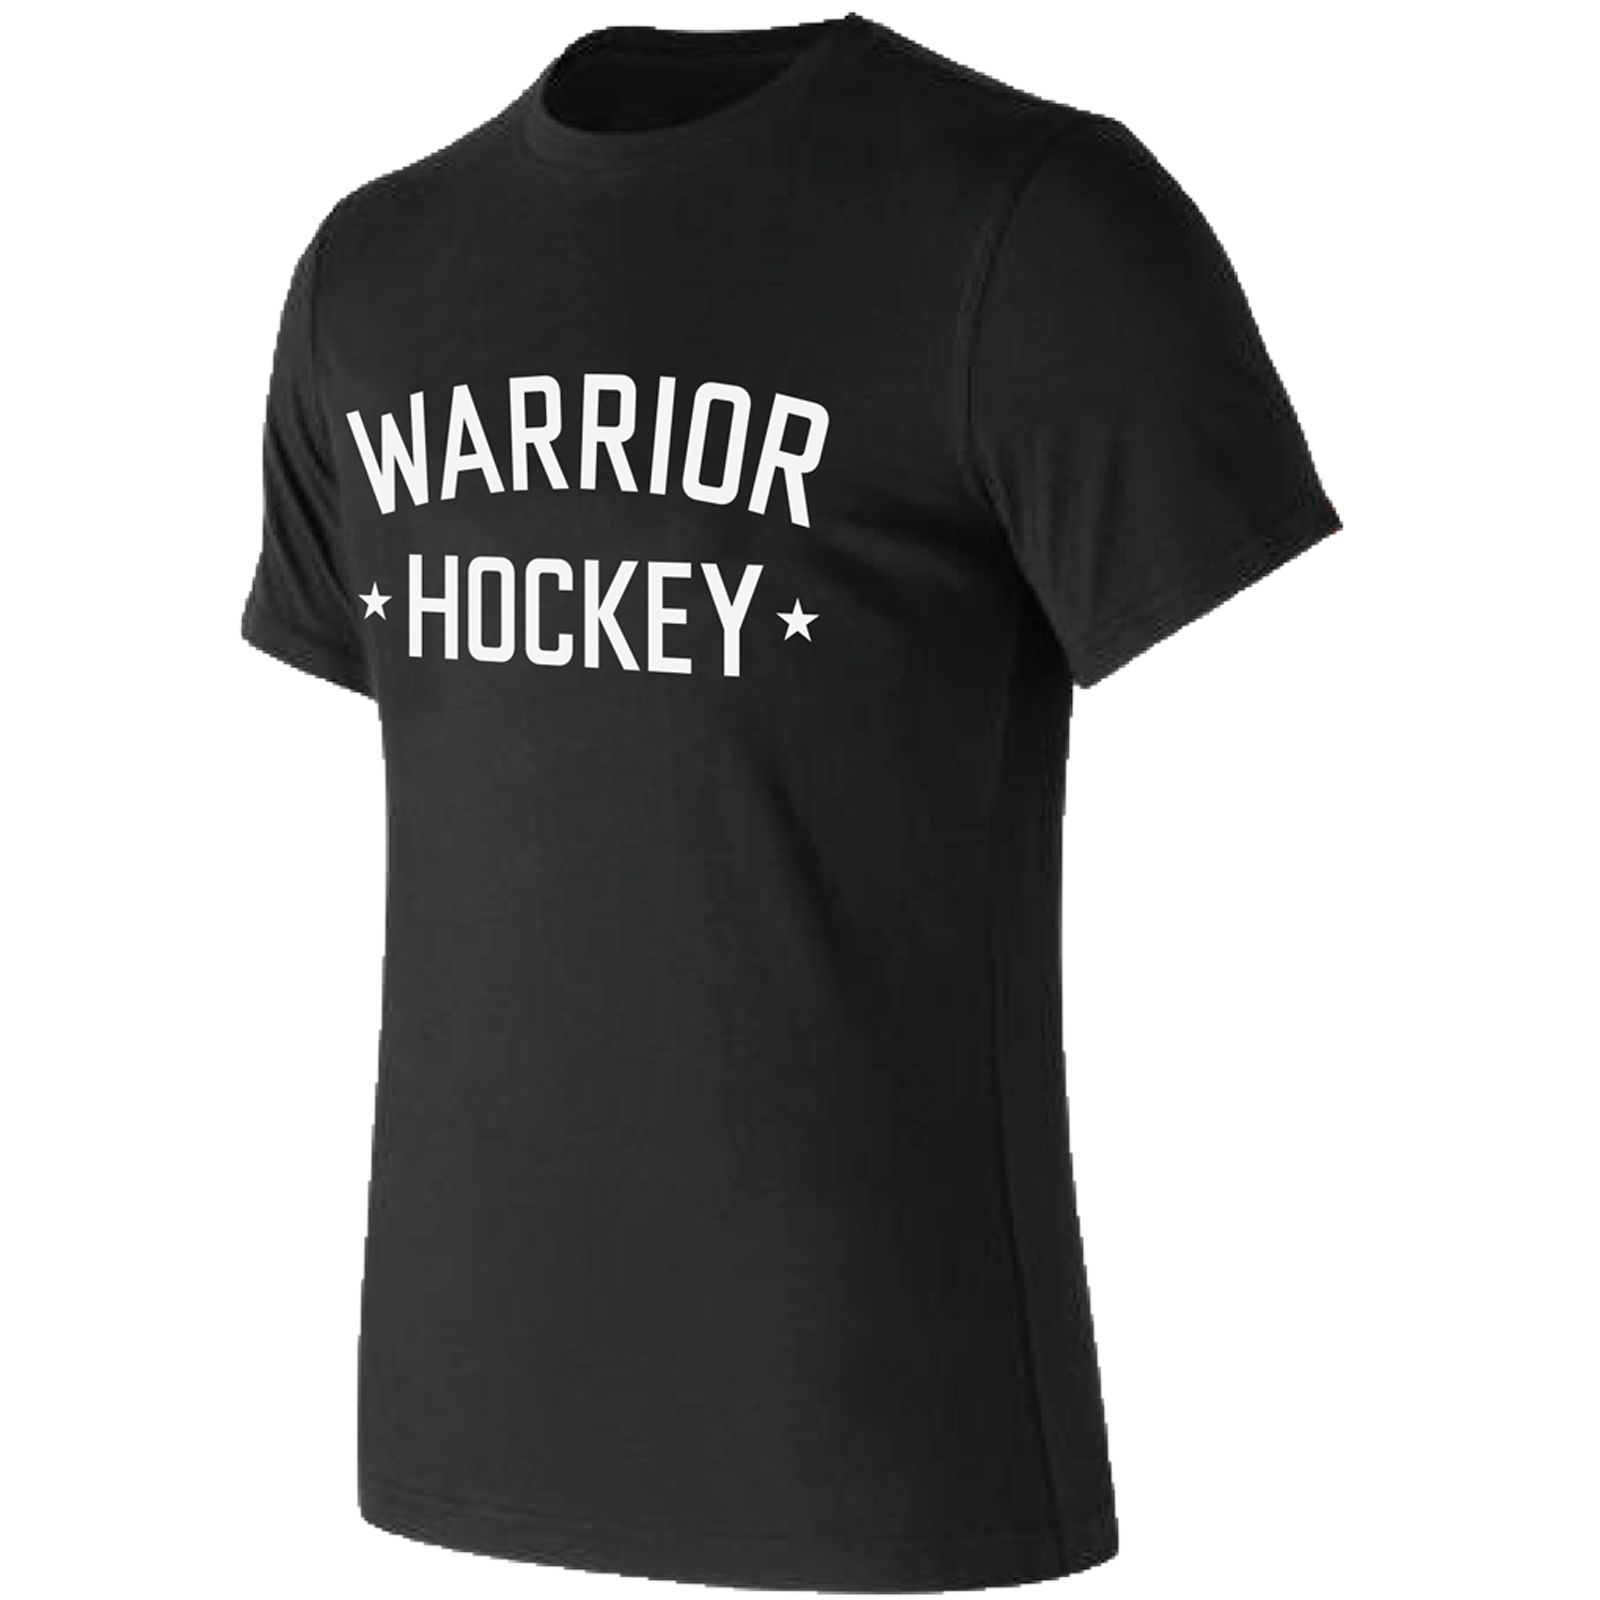 Warrior Hockey Street Tee, Black image number 0